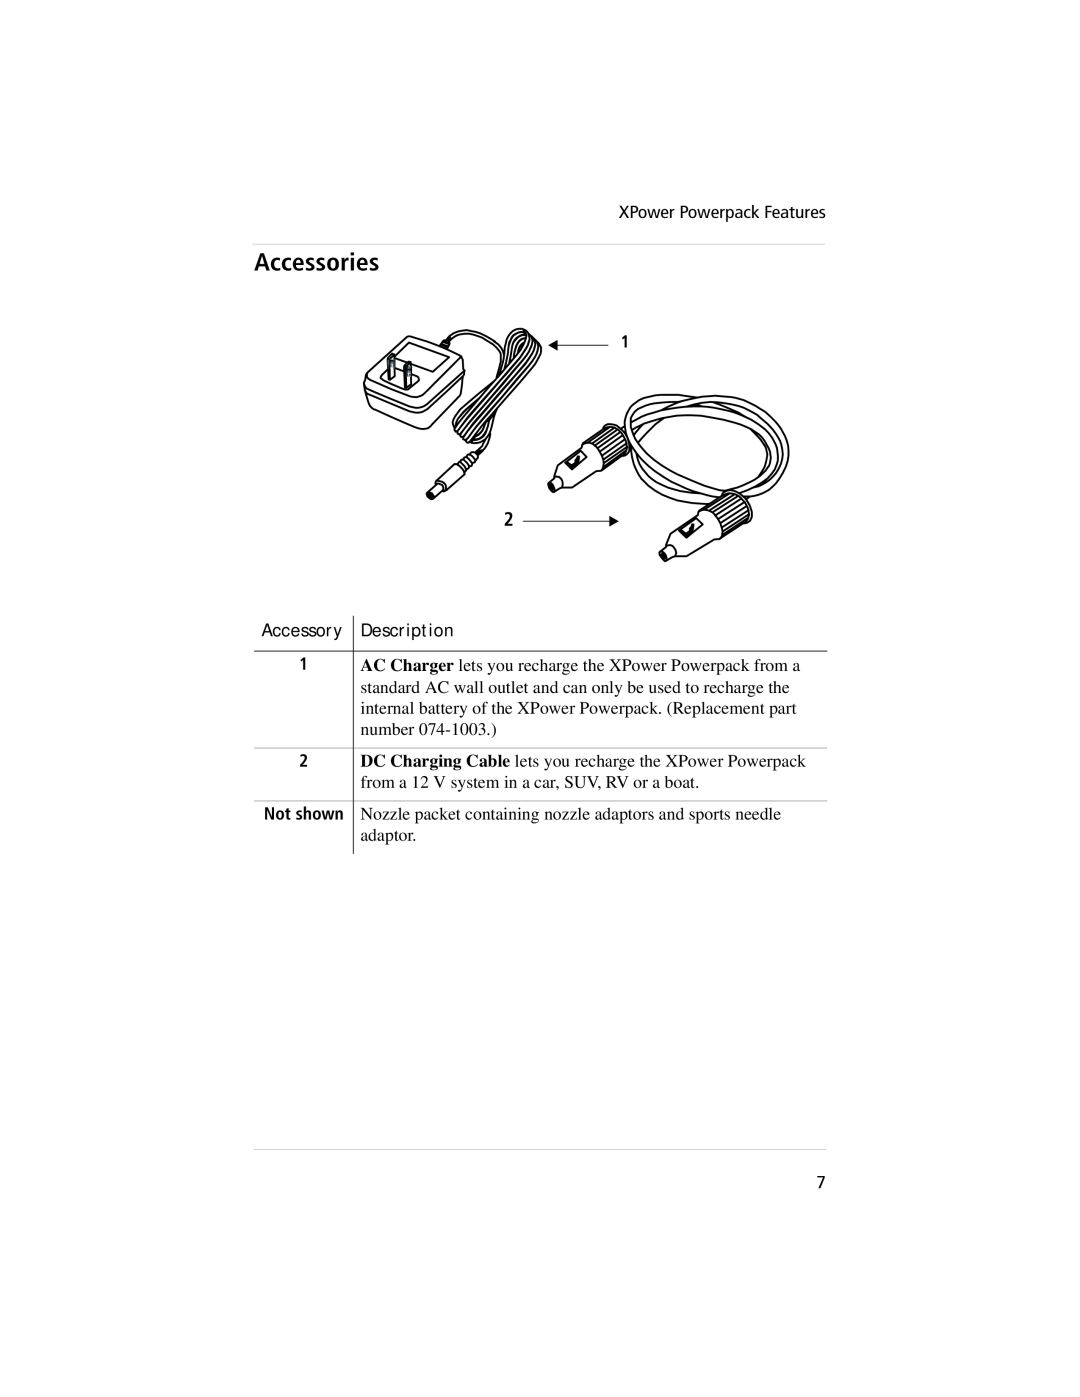 Xantrex Technology 400, 800 manual Accessories, Accessory Description 